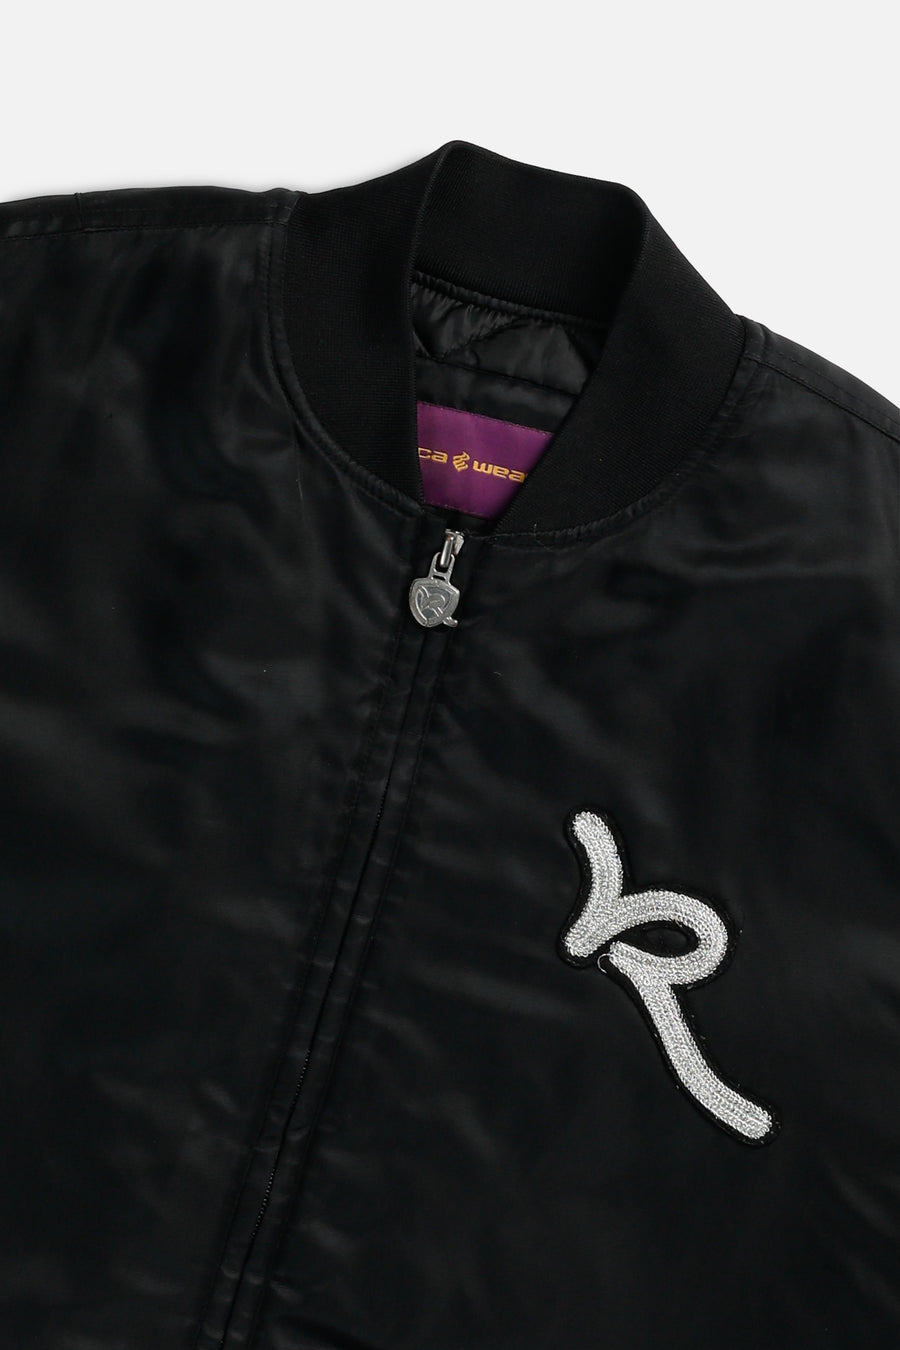 Vintage Rocawear Jacket - L